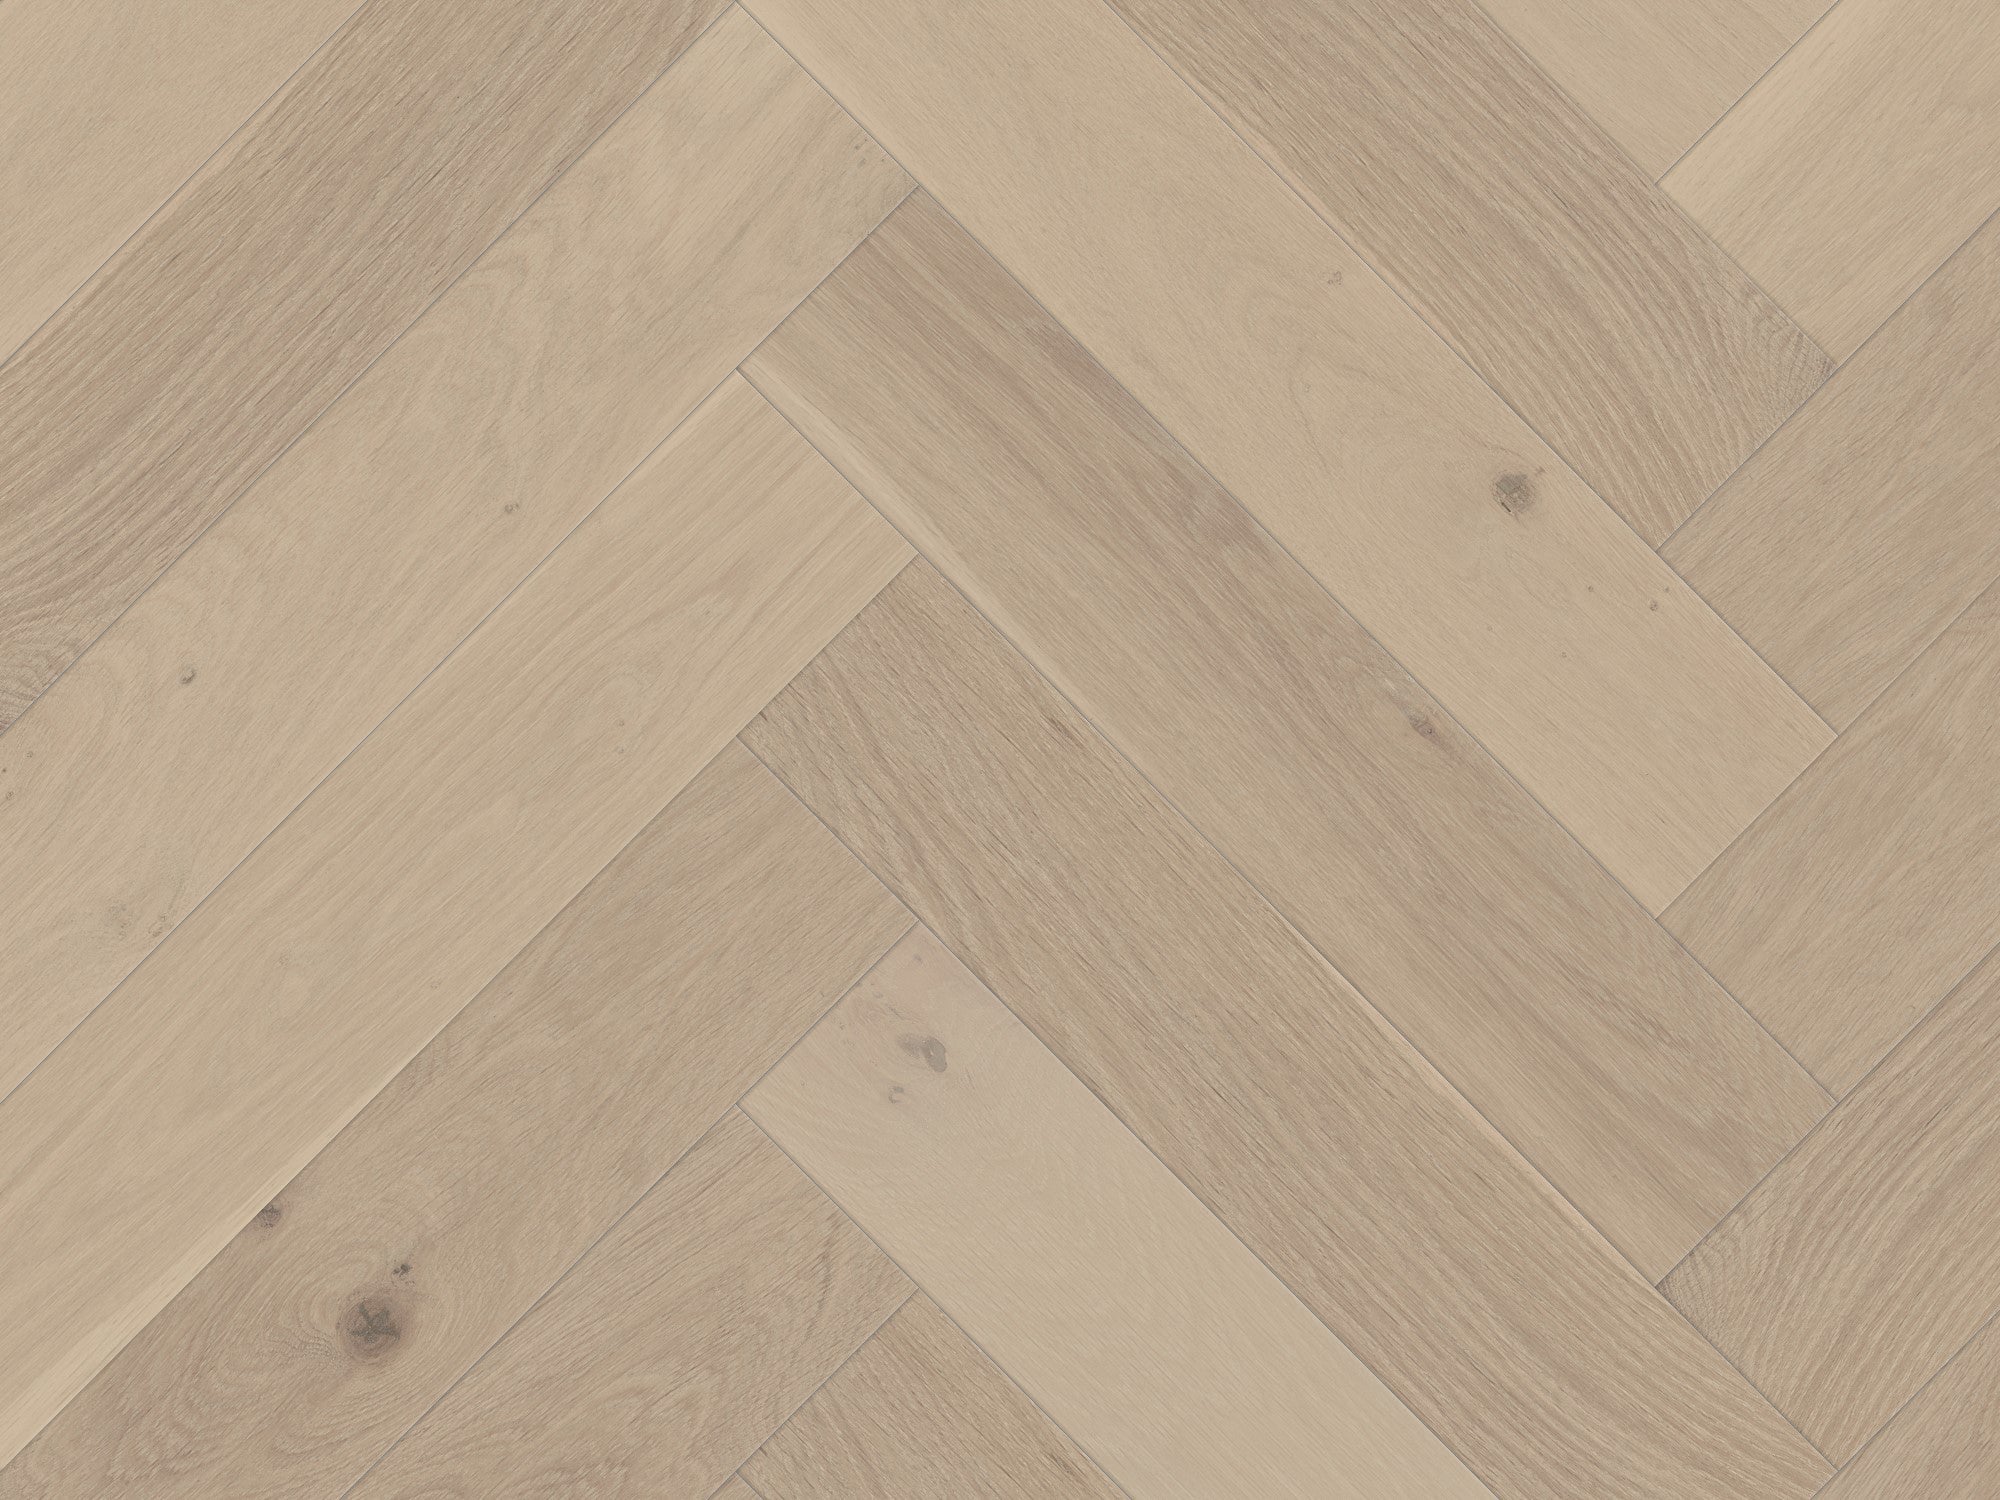 duchateau signature terra taiga herringbone european oak engineered hardnatural wood floor uv lacquer finish for interior use distributed by surface group international